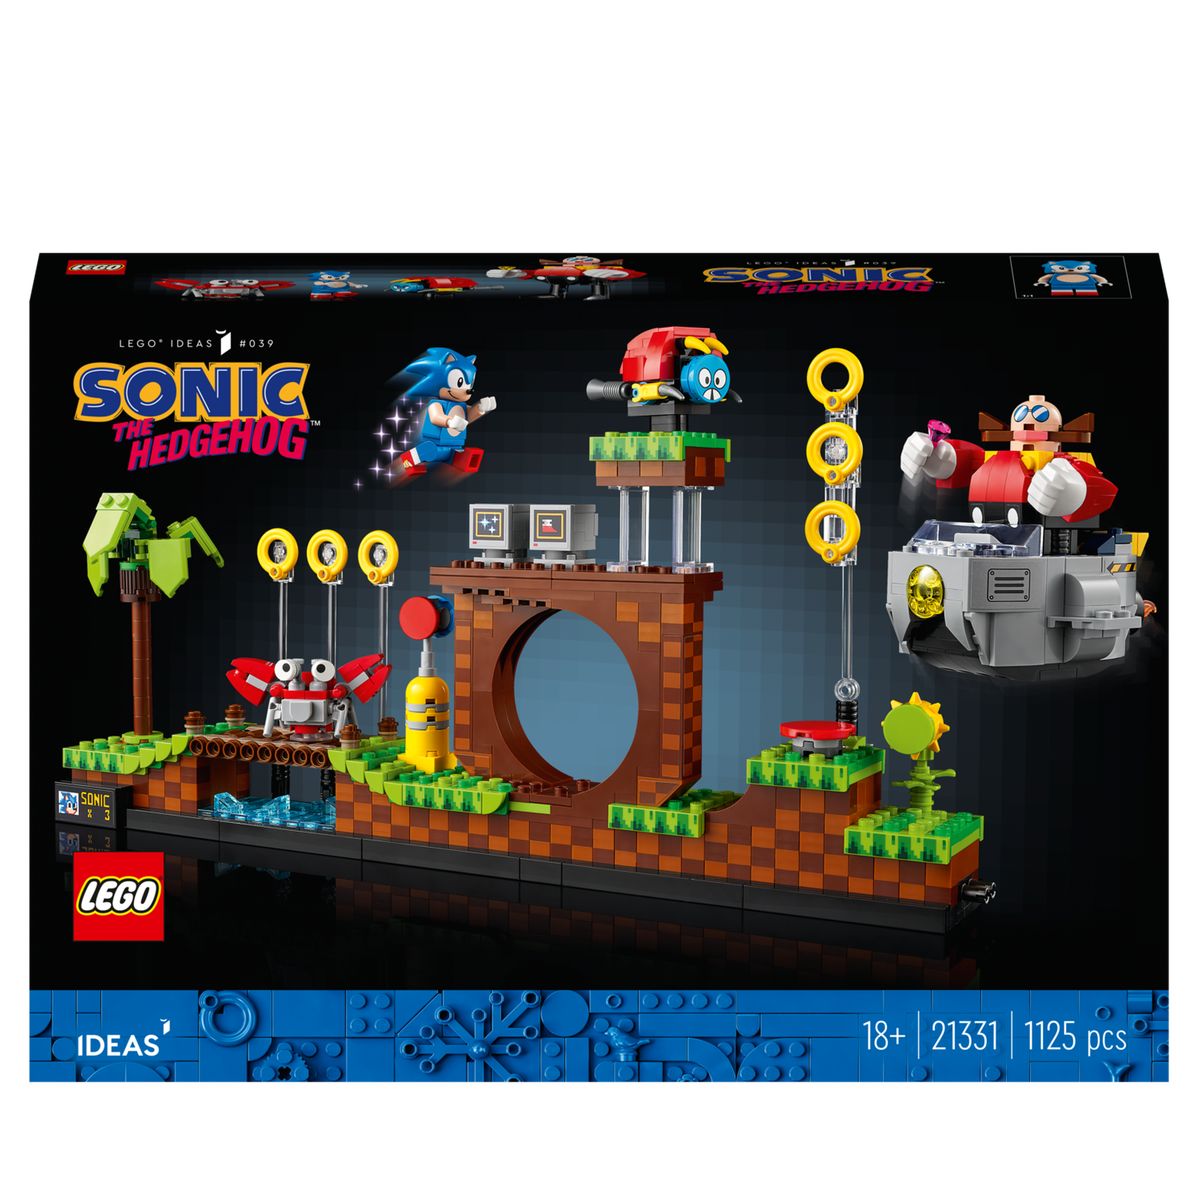 Sonic the hedgehog™ – green hill zone Lego